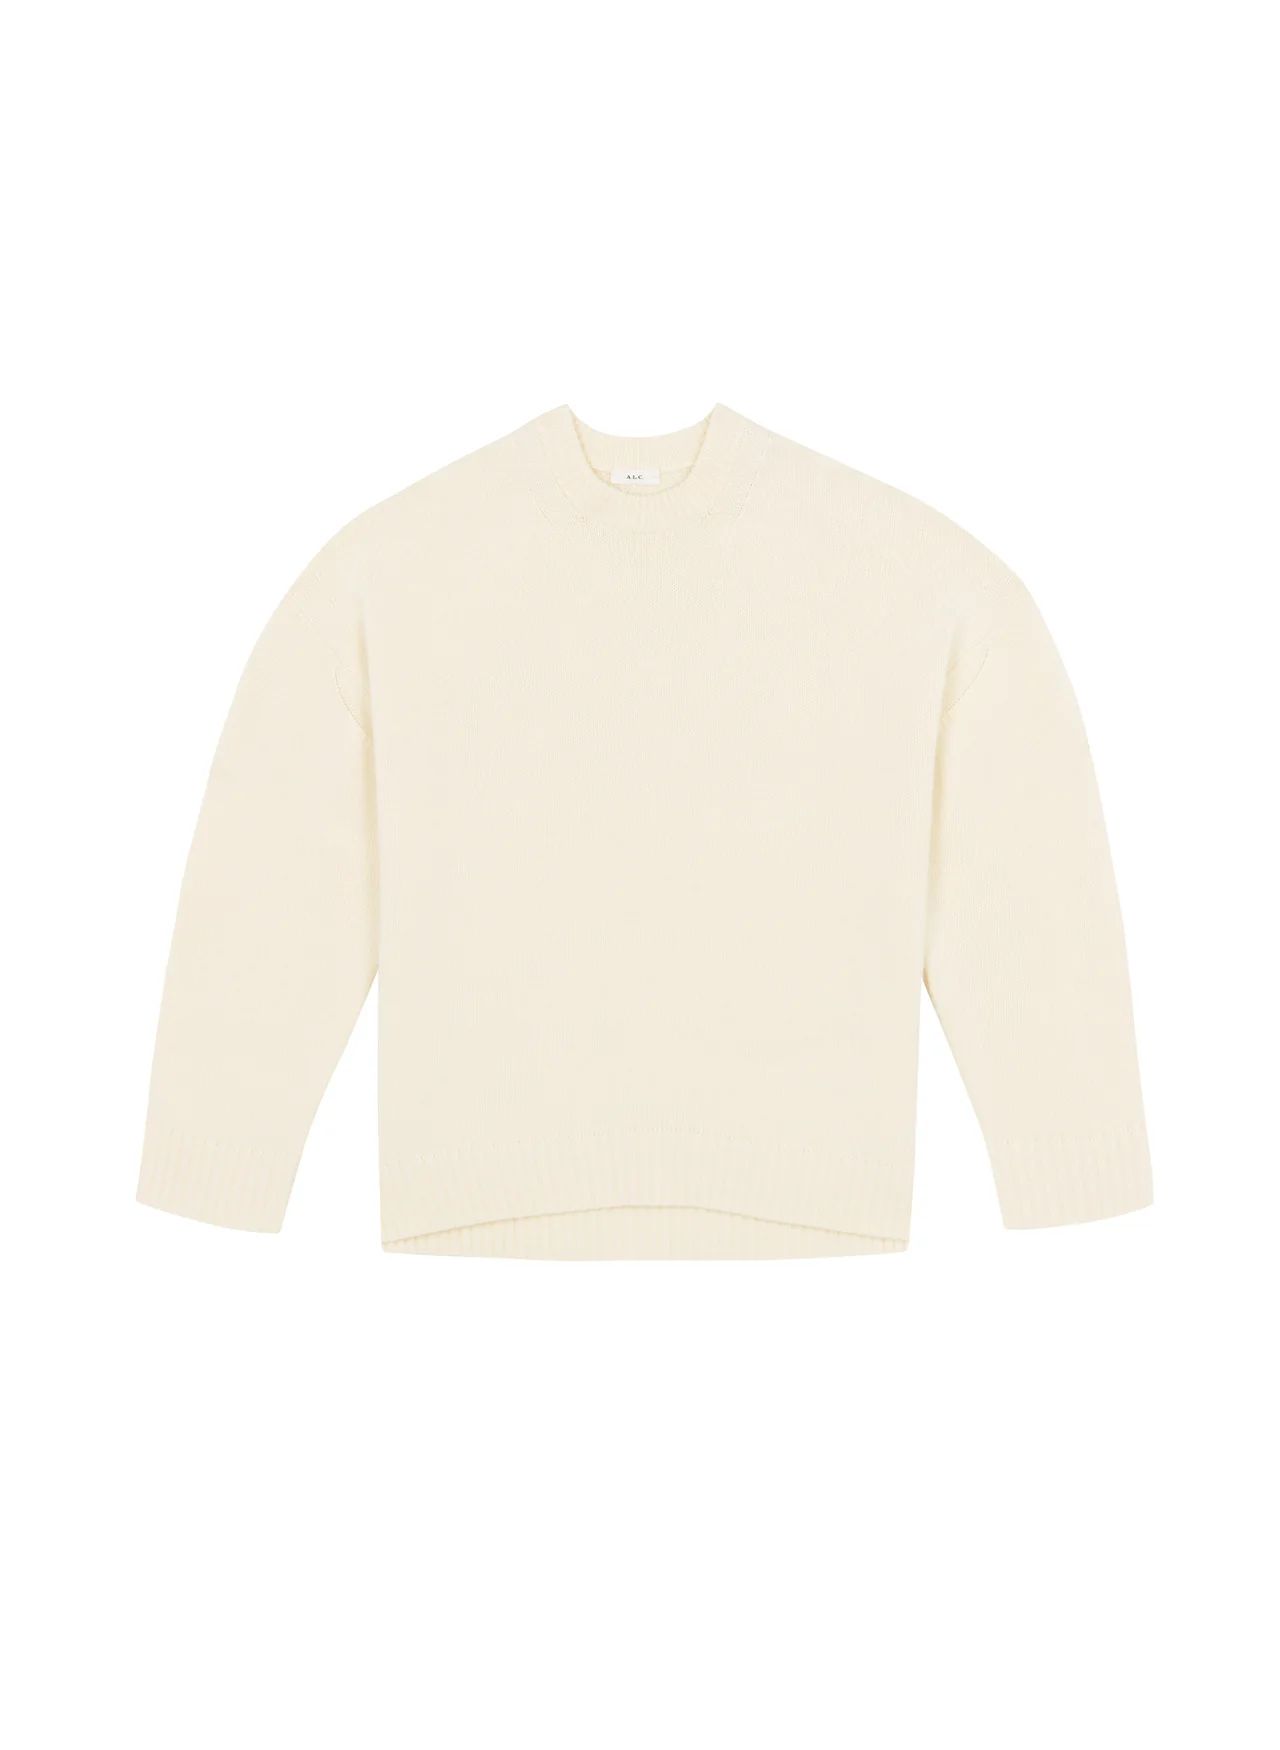 Ayden Wool Cashmere Sweater | A.L.C